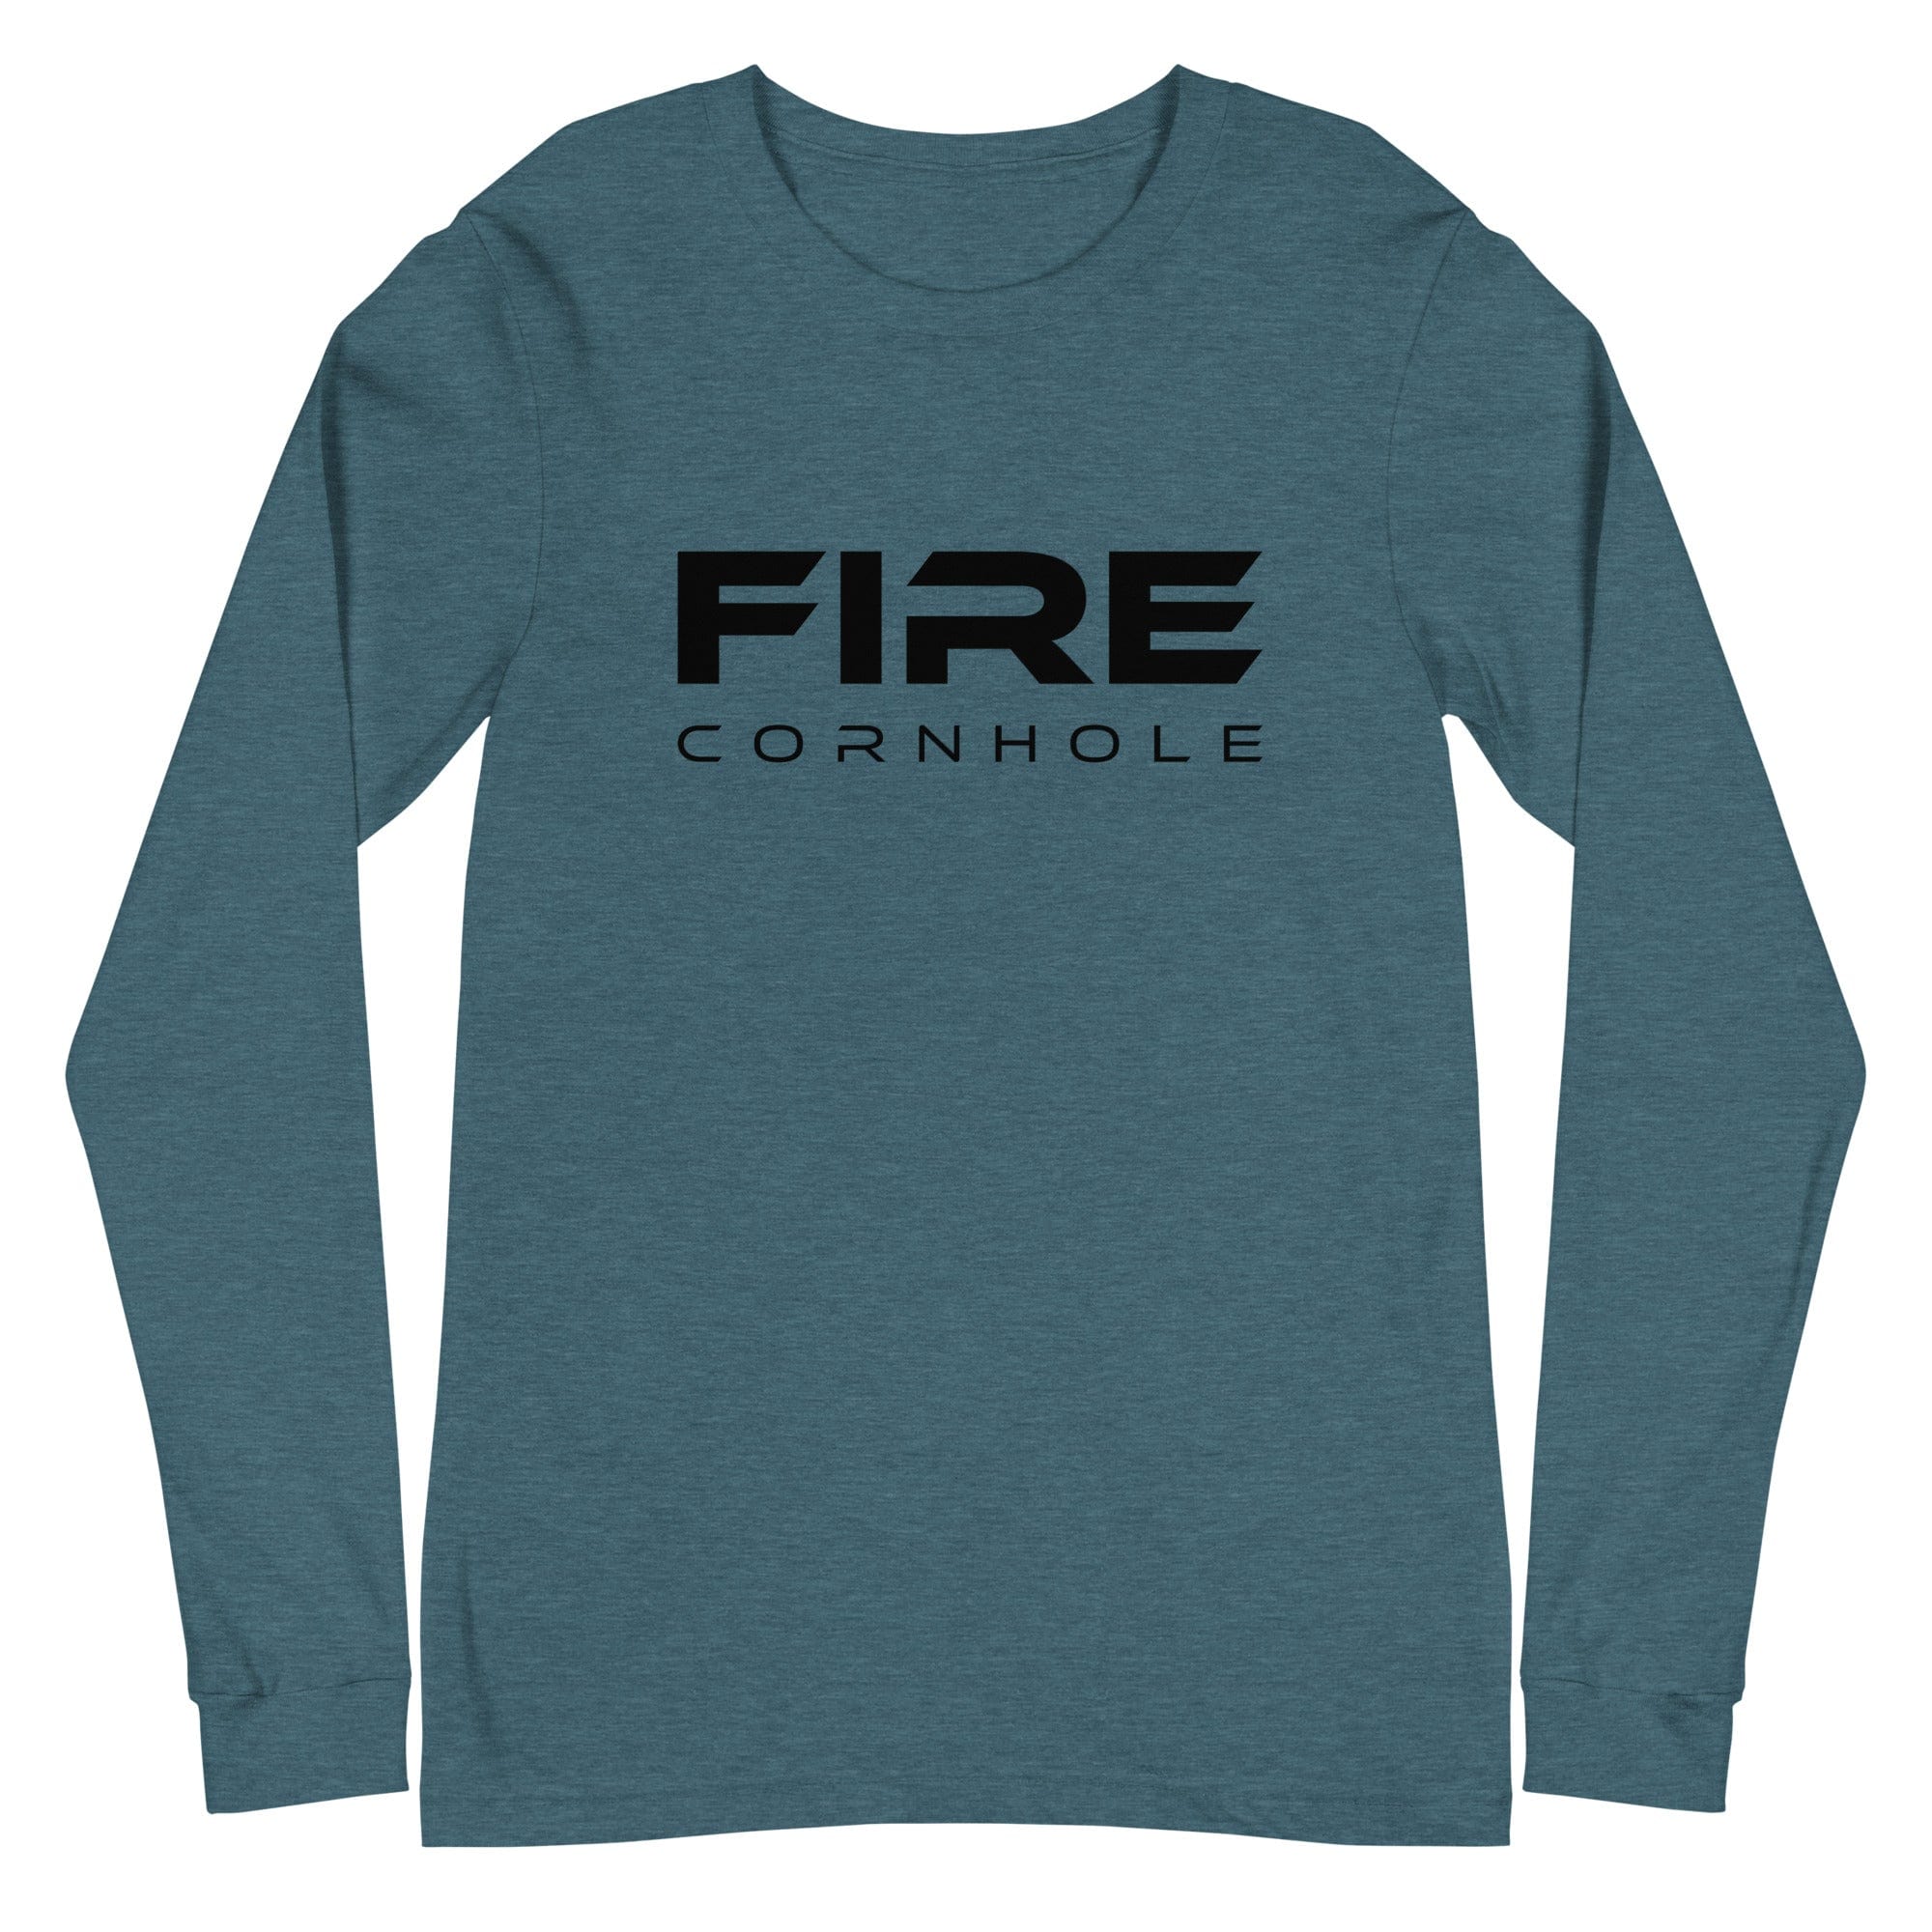 Heathered teal unisex cotton longsleeve shirt with Fire Cornhole logo in black